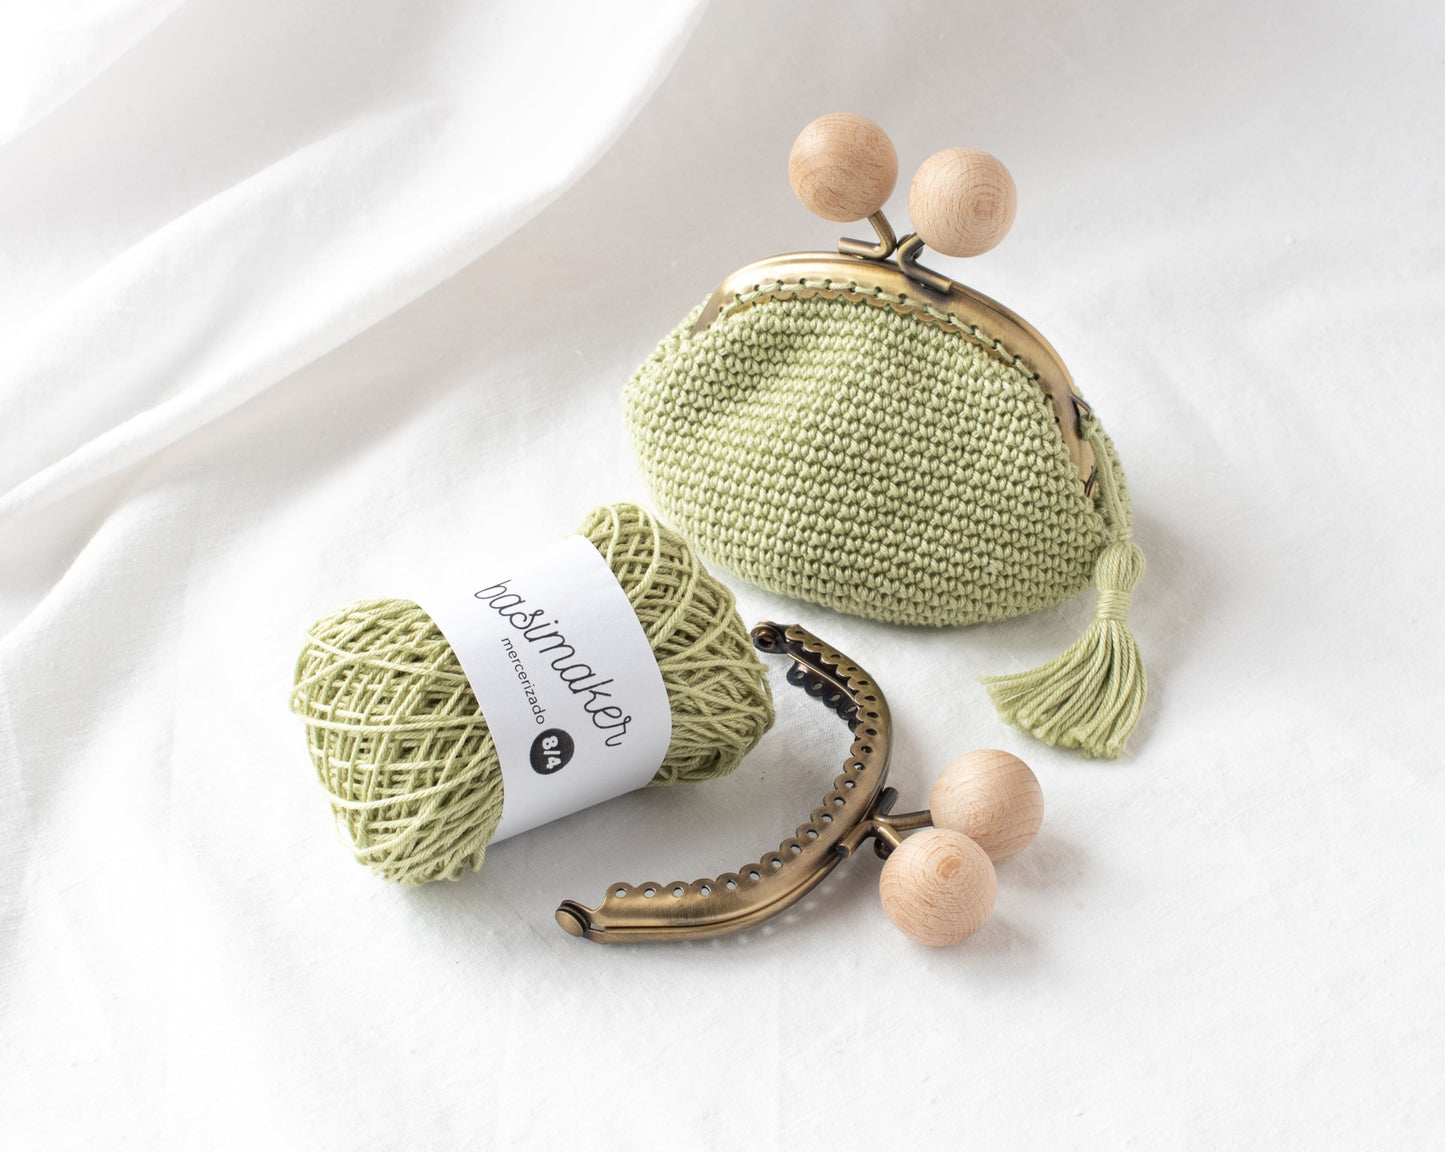 Crochet kit to make the BASIC purse with 8.5cm round frame, BEGINNER level